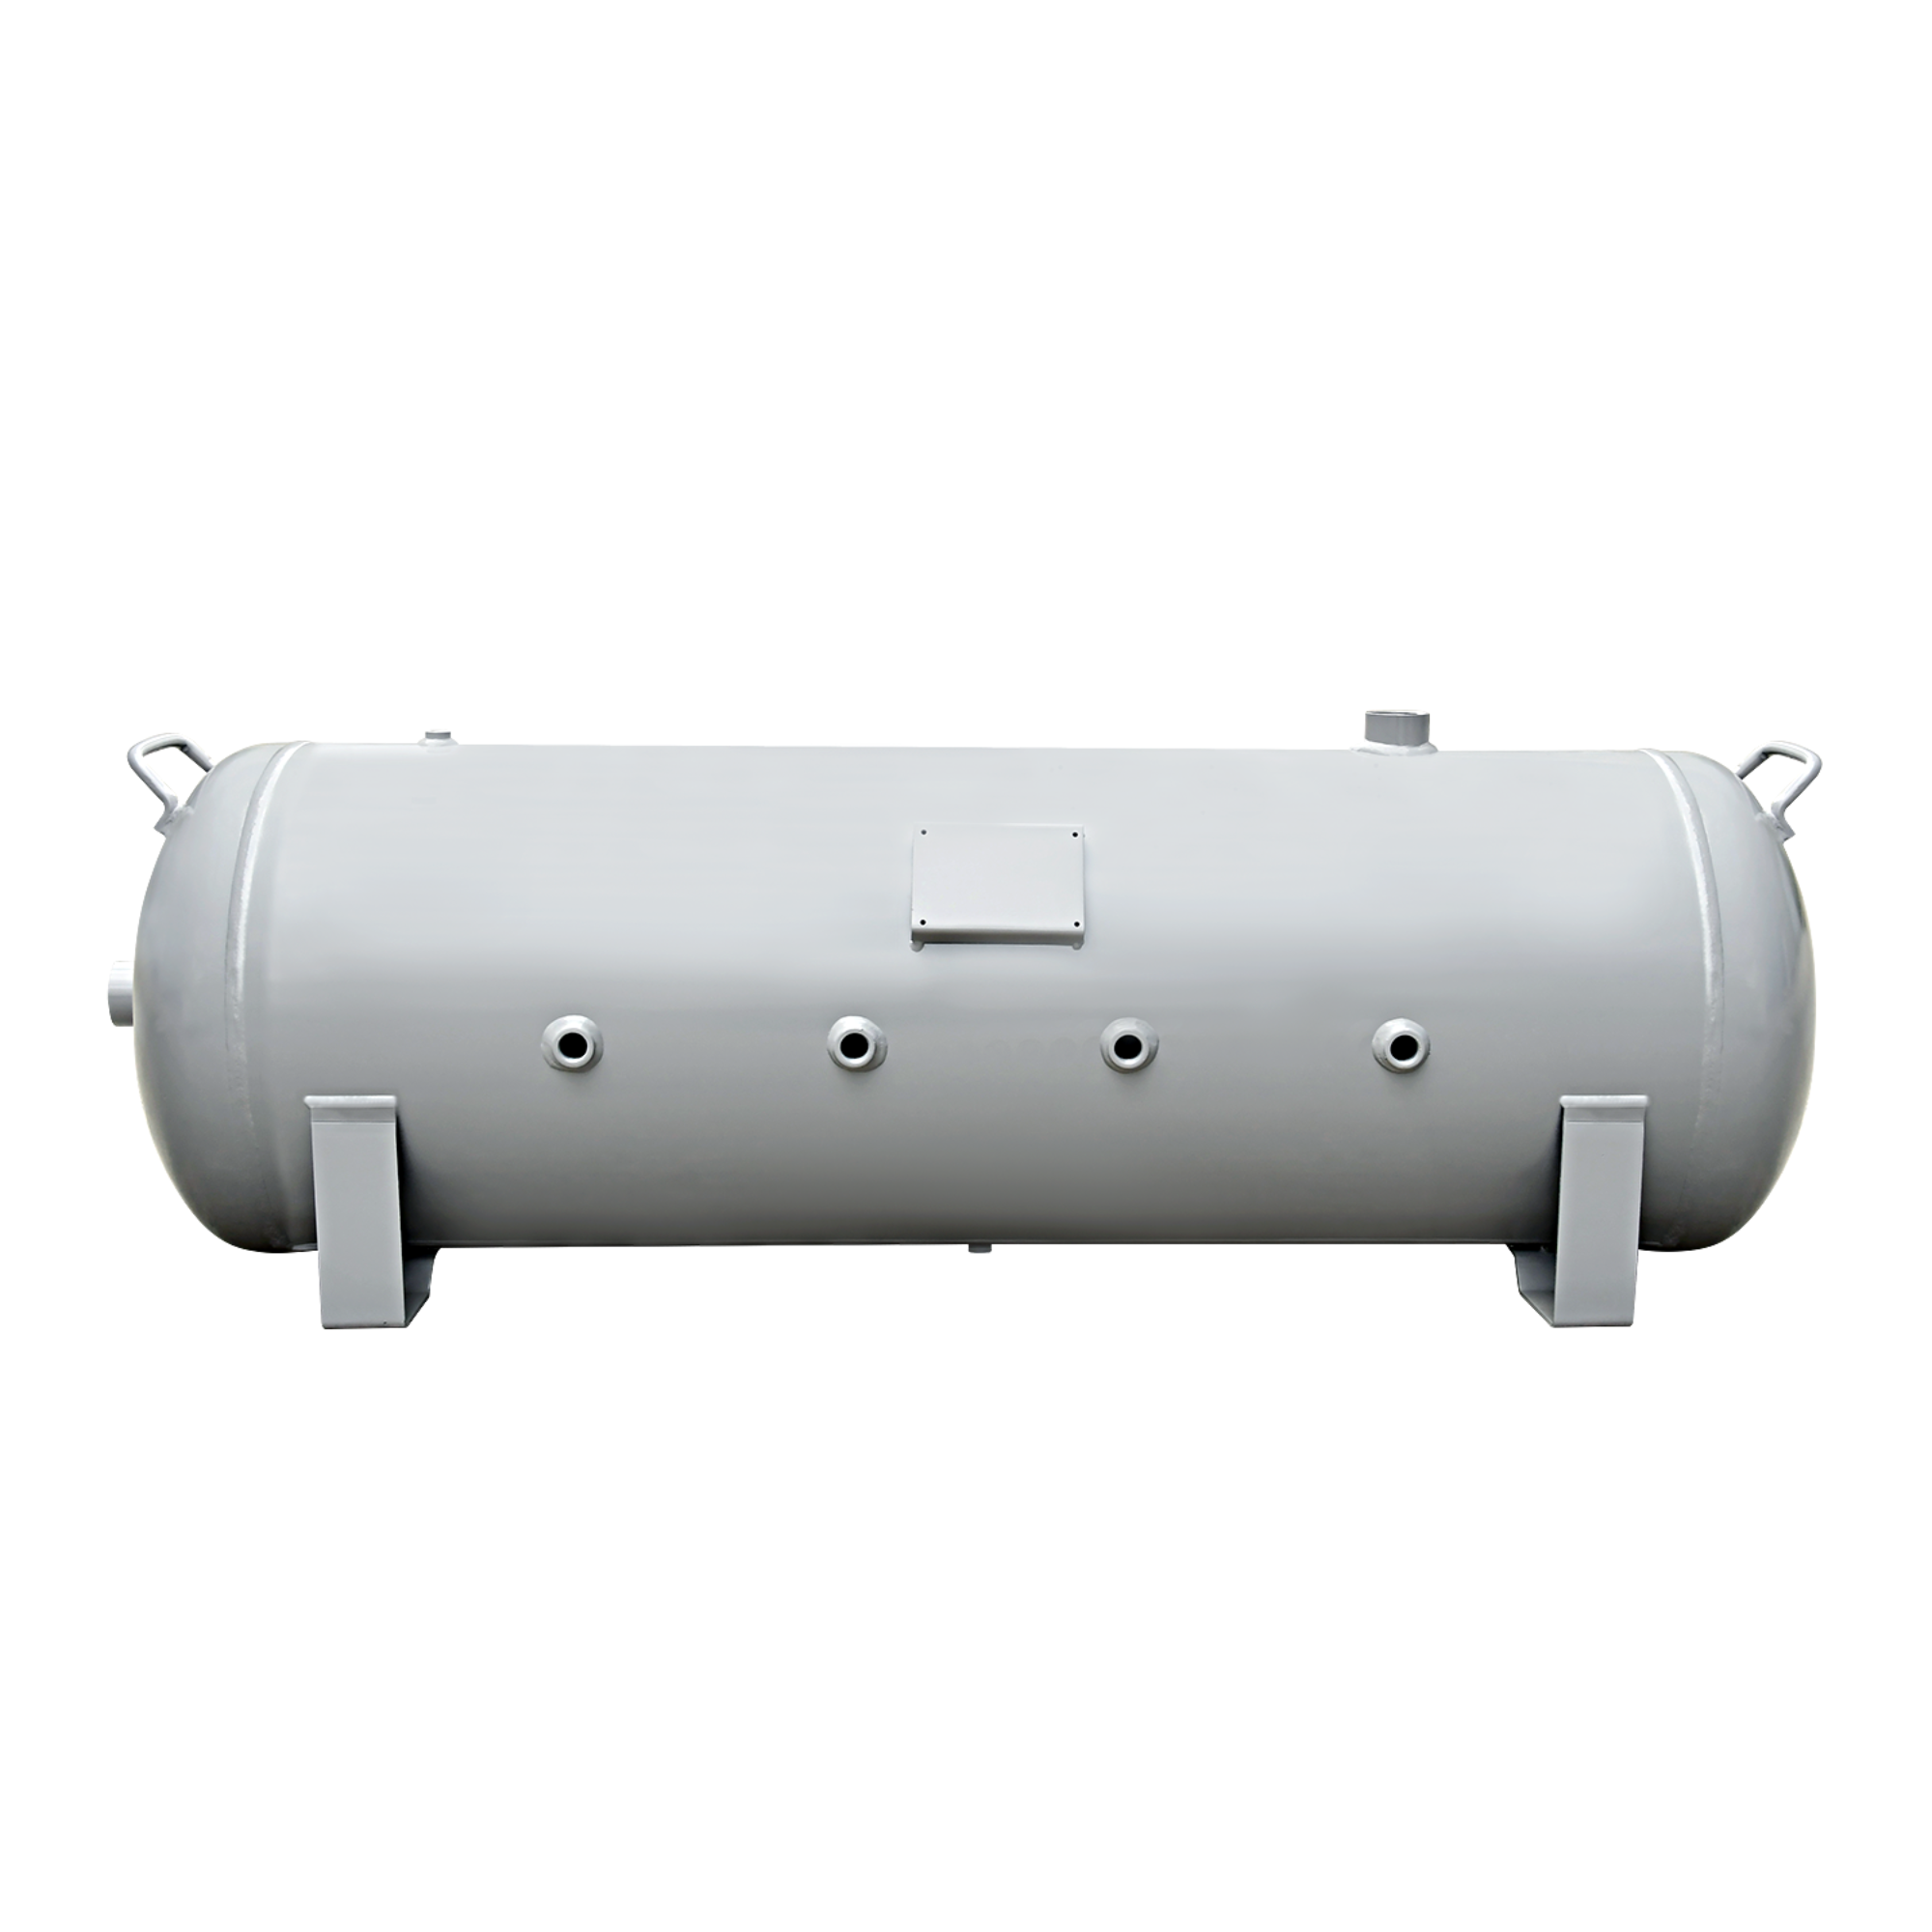 YC-150L-CSH branco/cinza 12bar tanque de armazenamento de ar horizontal sem costura de aço carbono